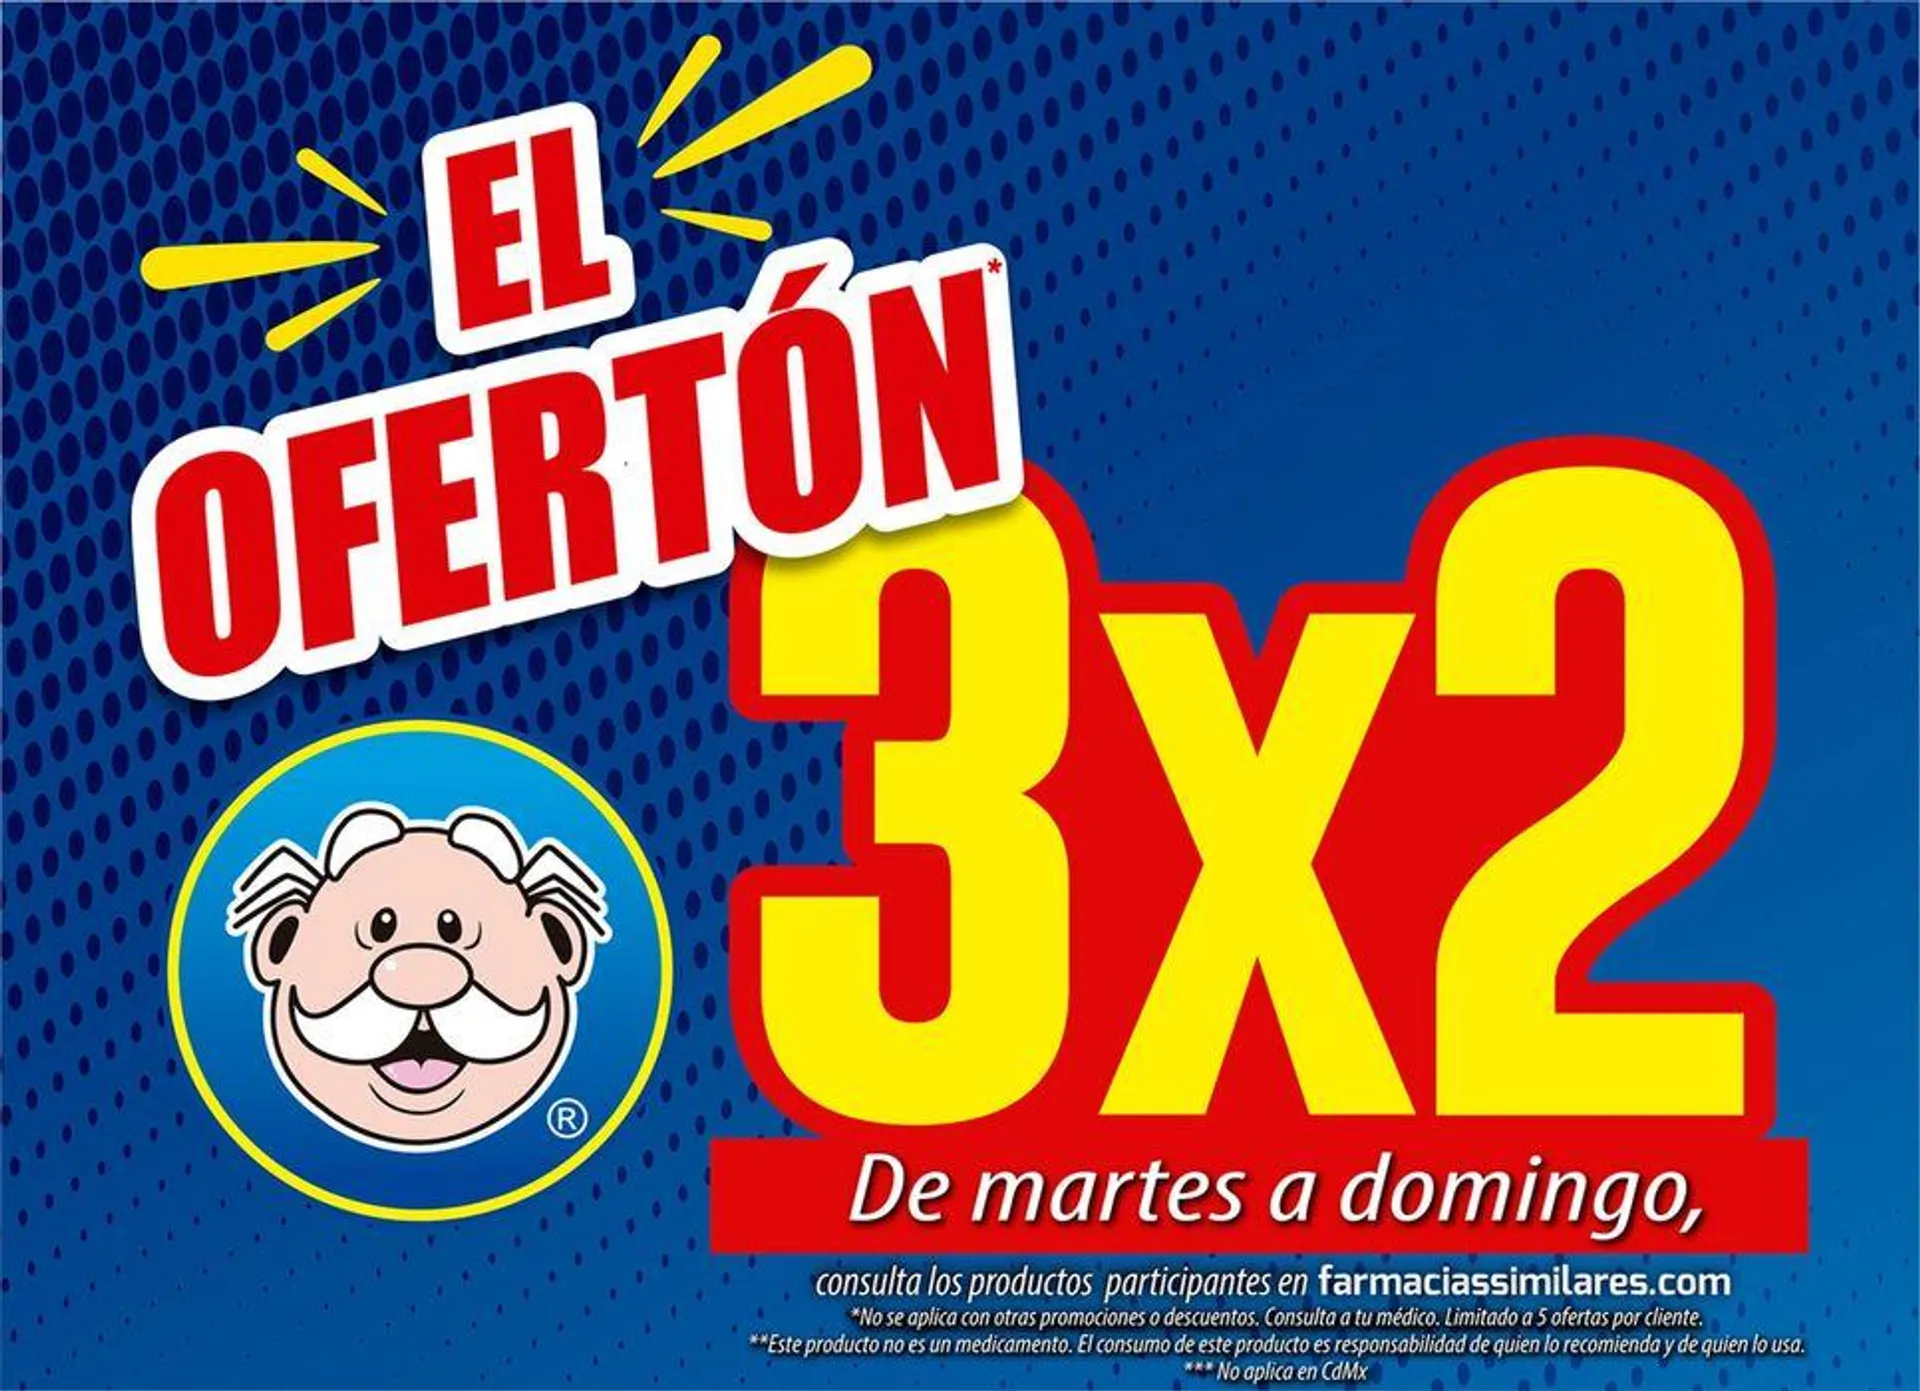 El Oferton 3x2 - 1